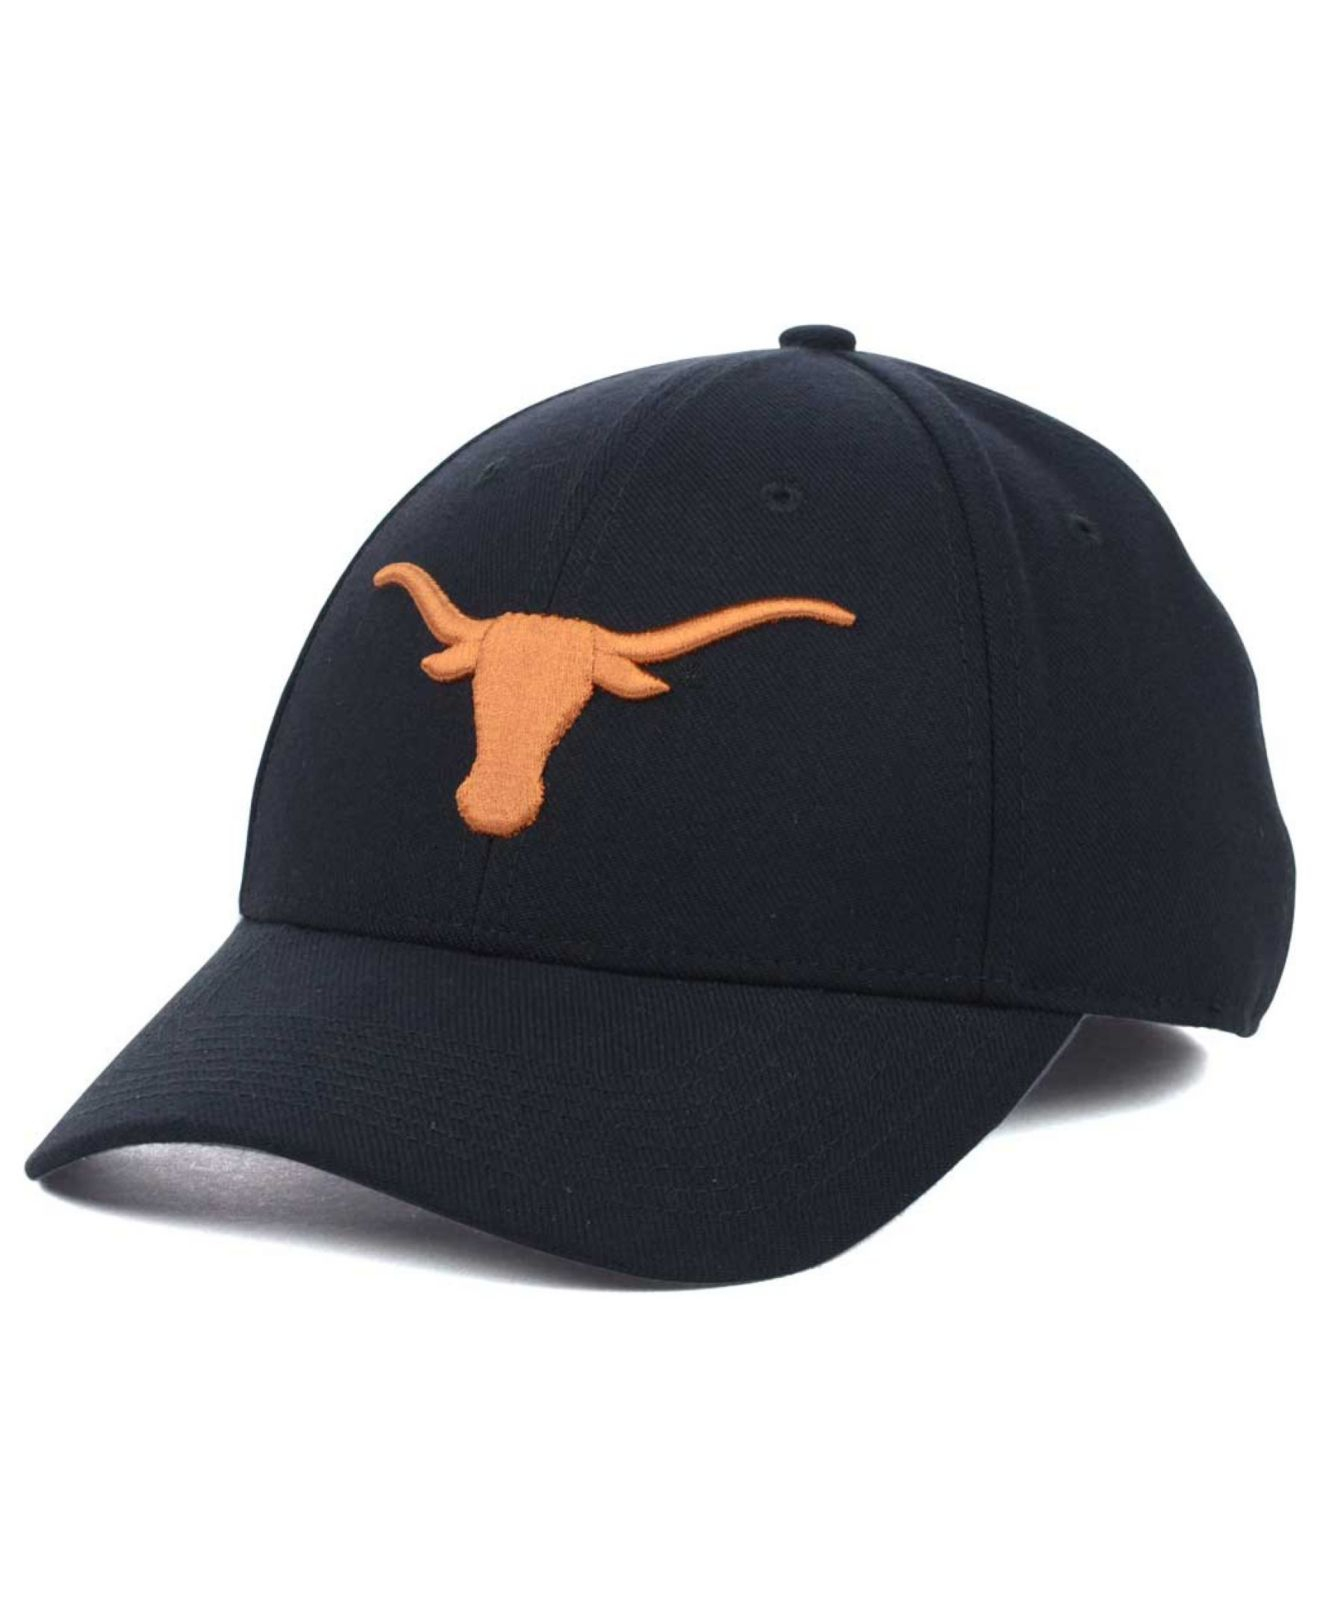 Nike Black Texas Longhorns Dri Fit Swoosh Flex Cap Product 1 21063001 3 686500341 Normal 